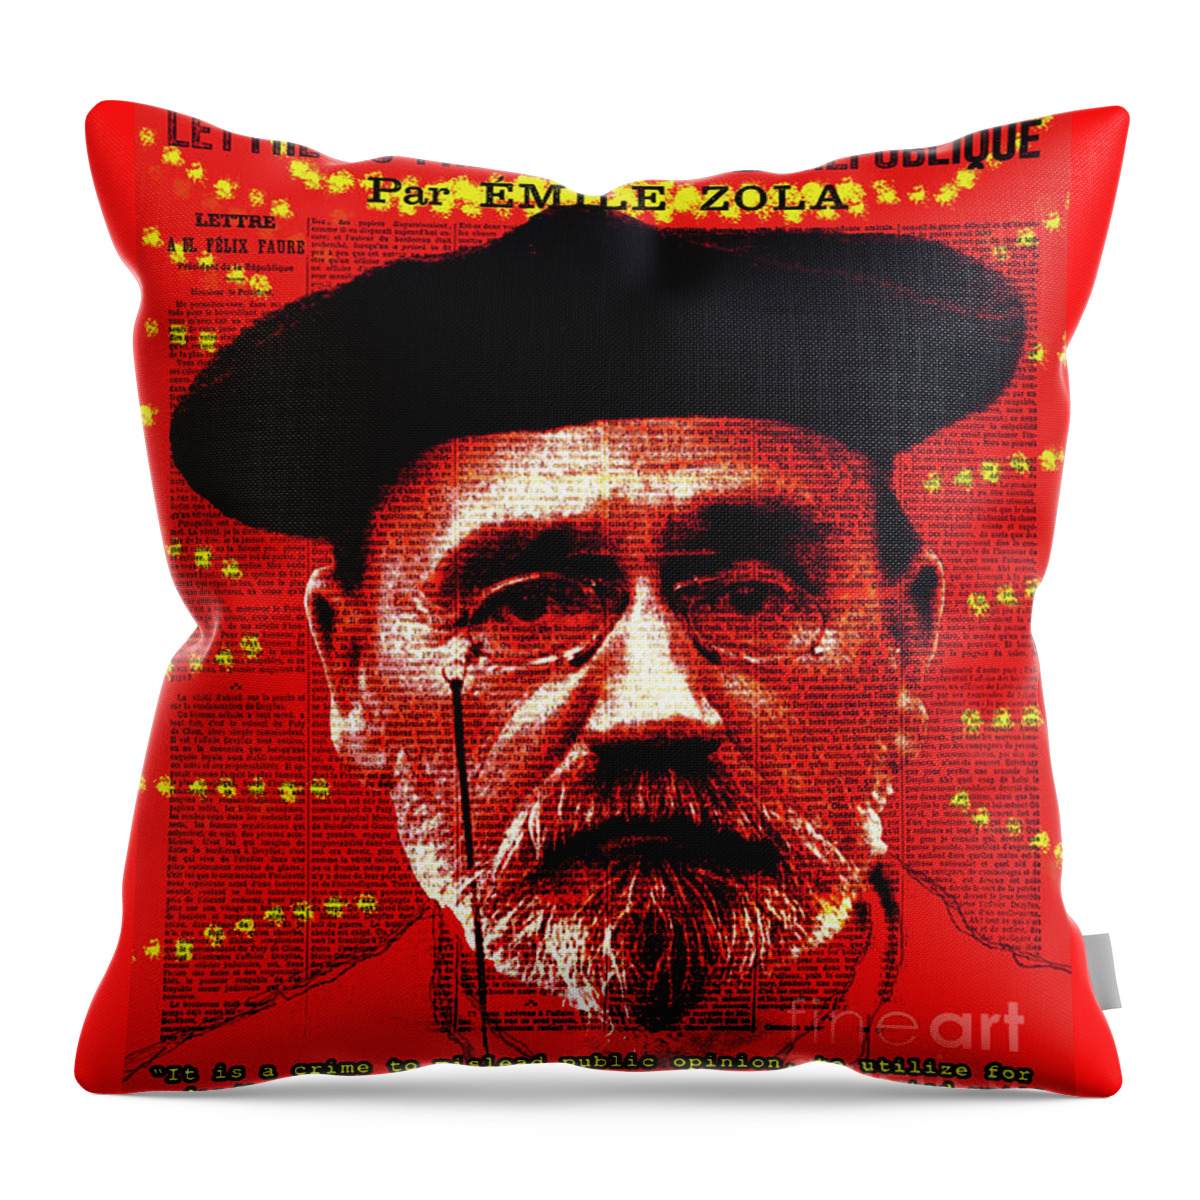 Émile Zola Throw Pillow featuring the digital art Emile Zola by Zoran Maslic